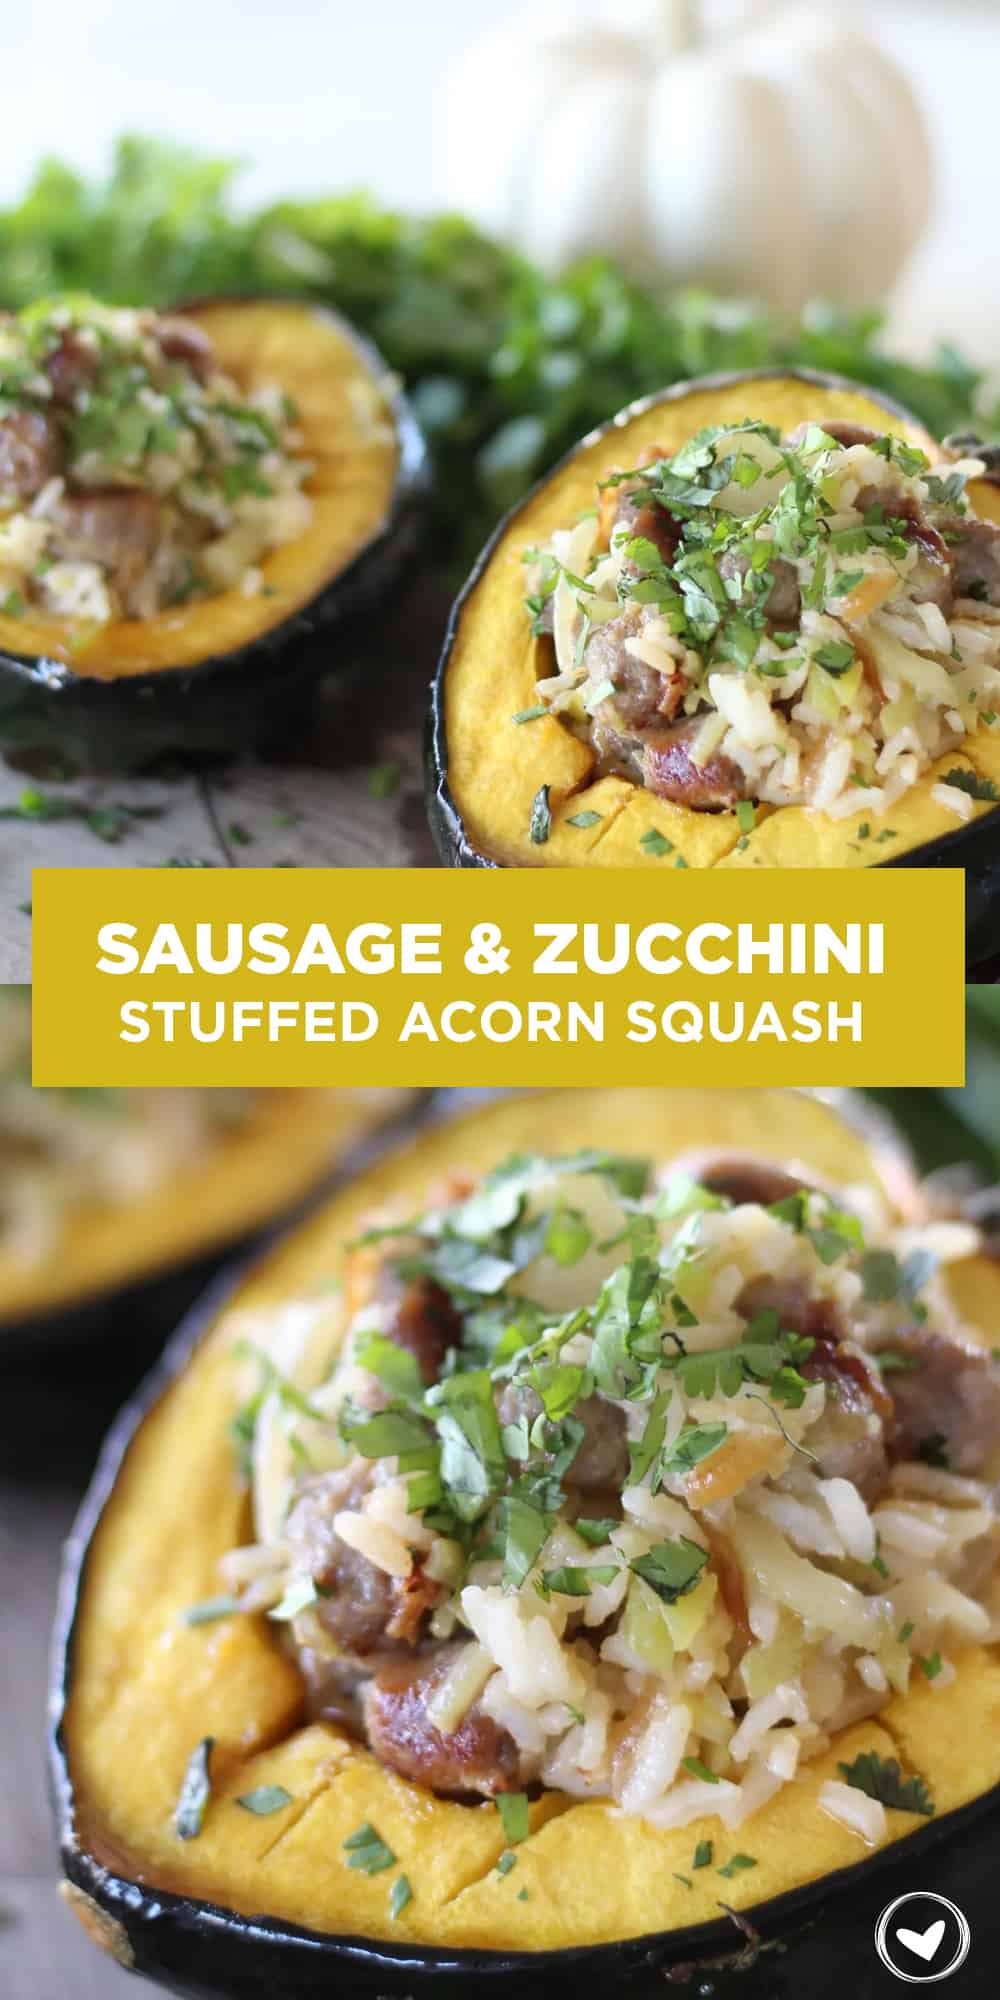 Sausage & Zucchini Stuffed Acorn Squash